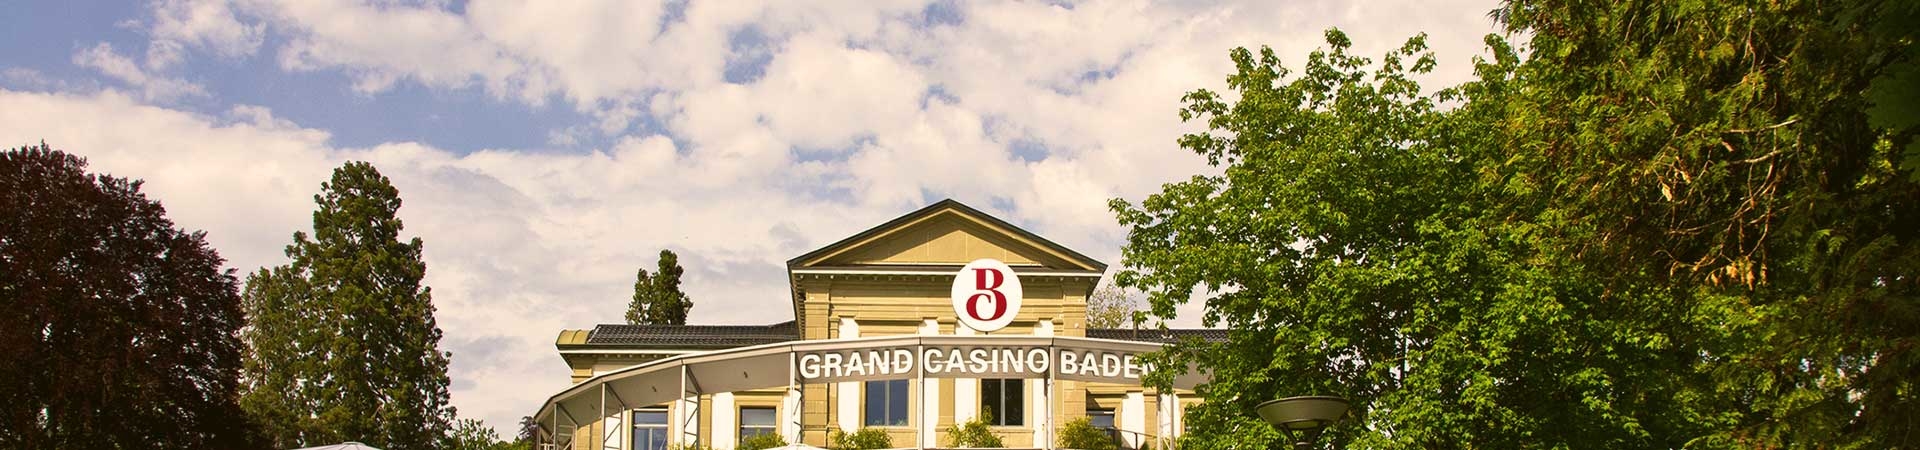 Casino Baden Anfahrt